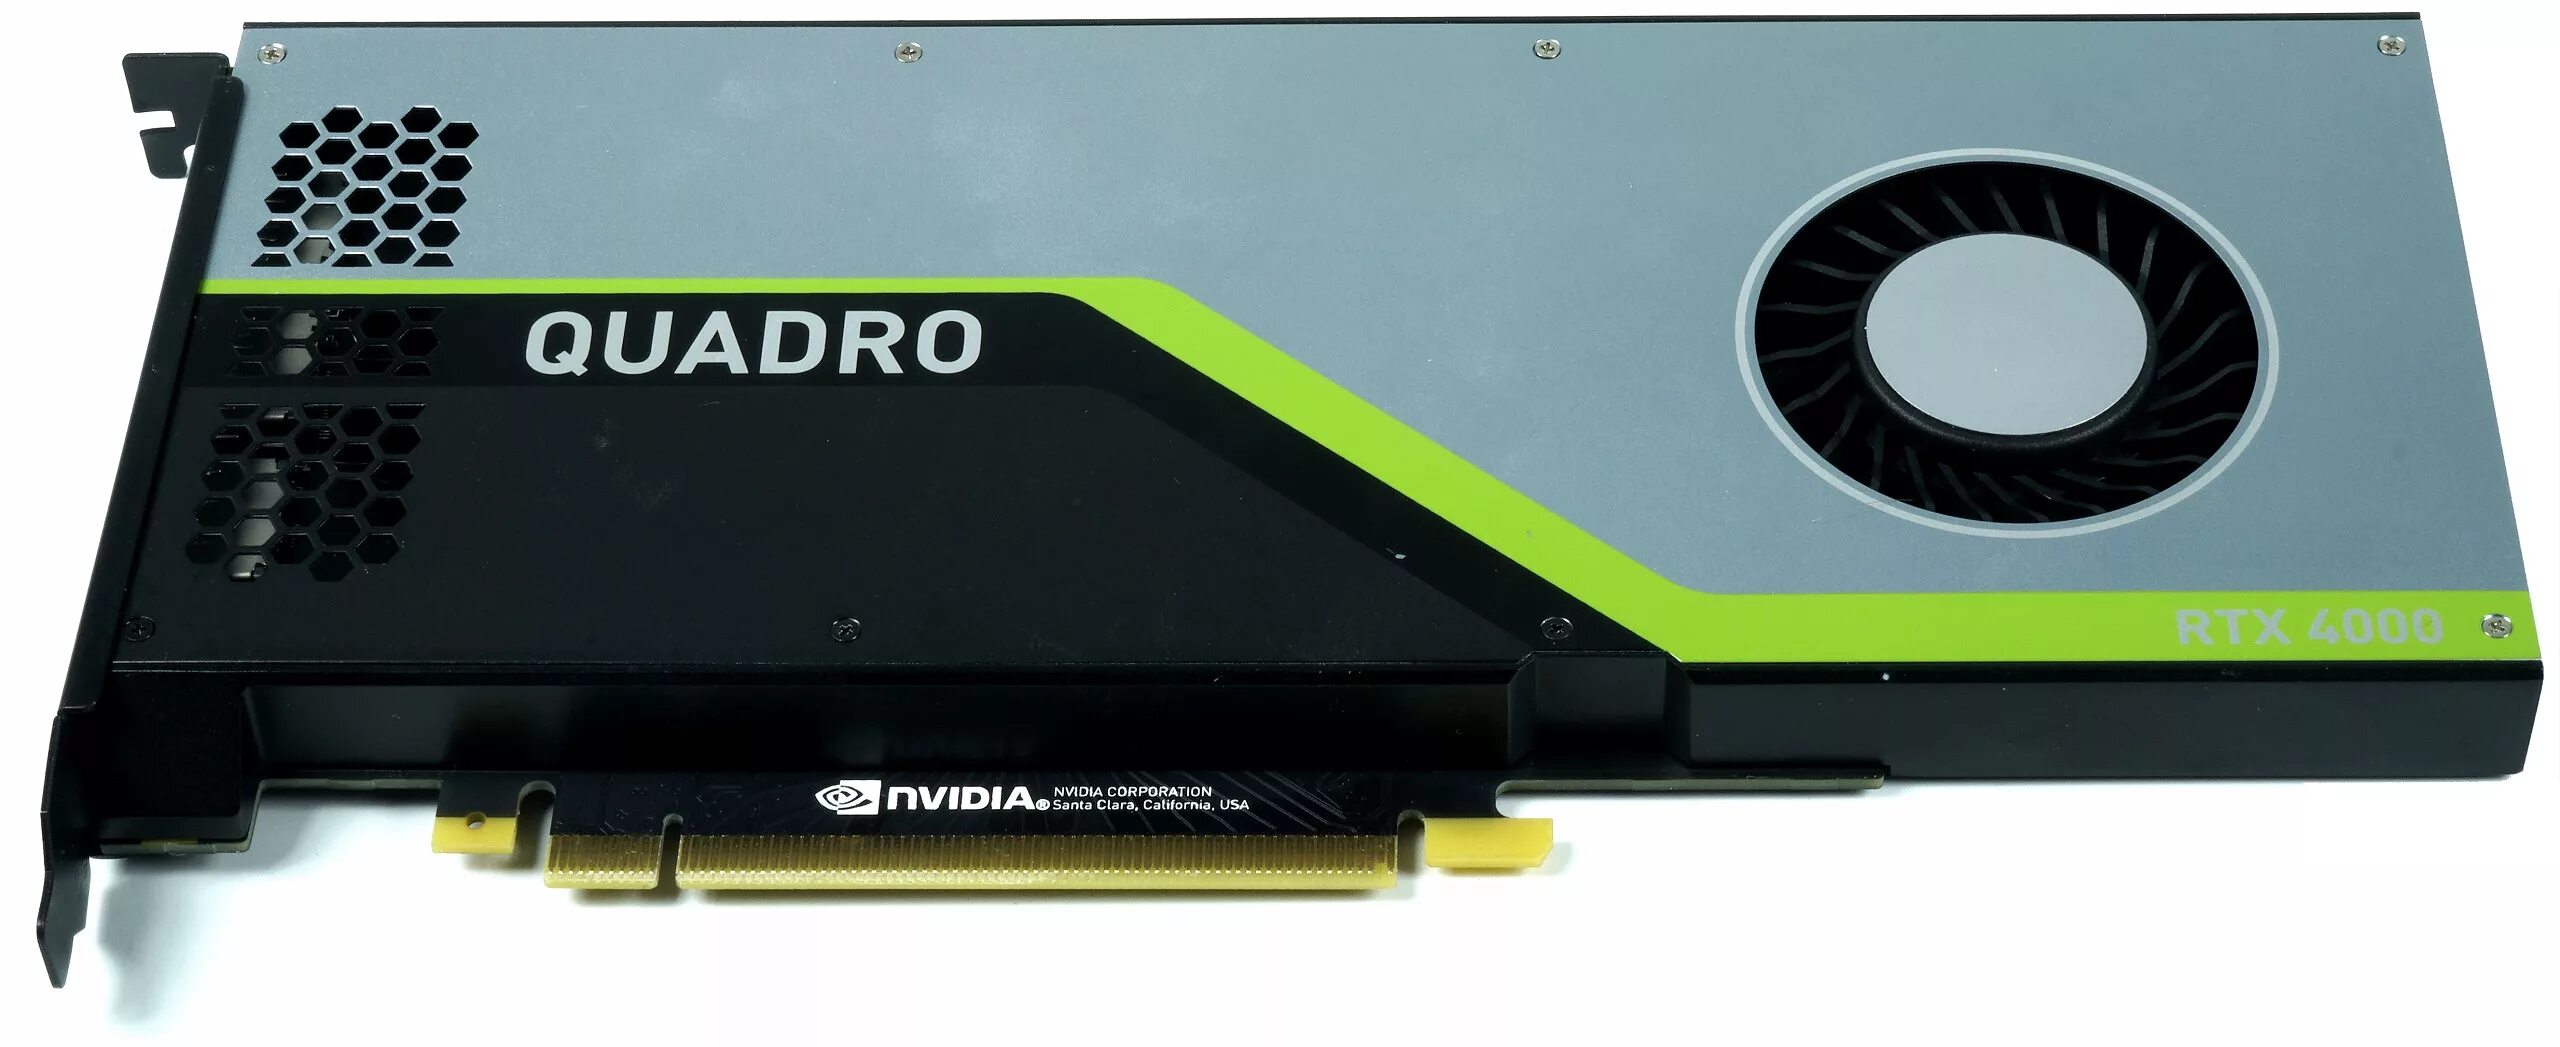 Quadro rtx 4000. PNY NVIDIA RTX a4000. Видеокарта NVIDIA Quadro RTX a4000 16 ГБ. RTX 4000. Видеокарта PNY NVIDIA Quadro RTX 4000.